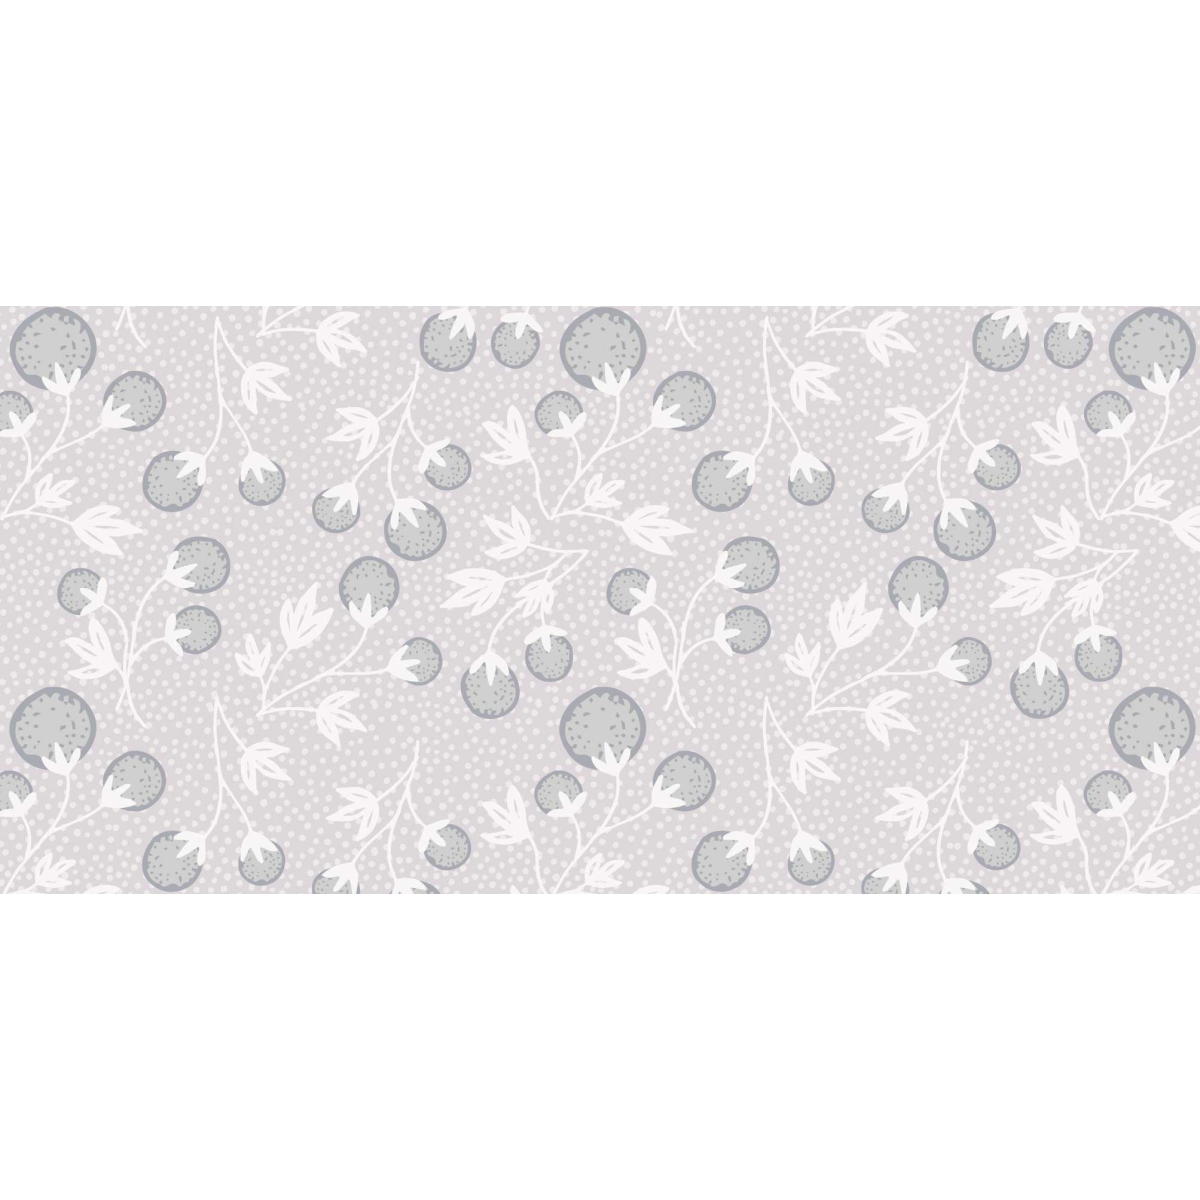 Panoramic wallpaper pompom flowers -Collection Petit Atelier design - Acte-deco